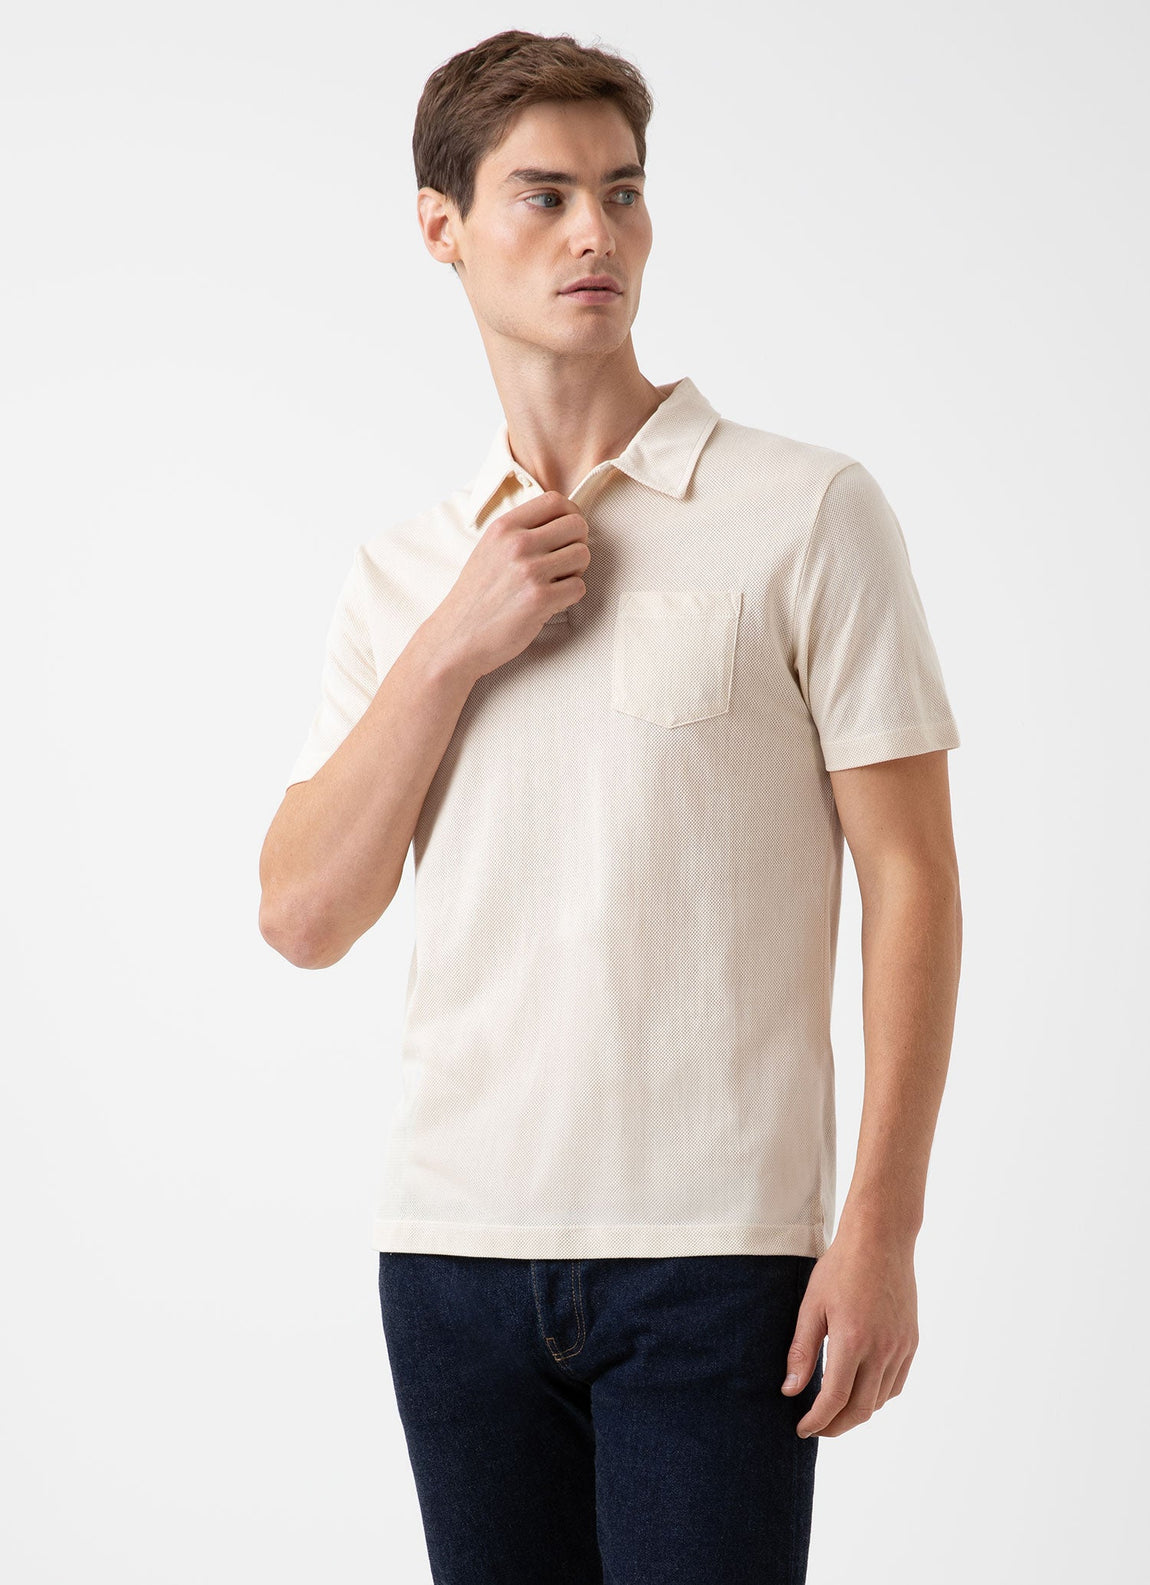 Men's Riviera Polo Shirt in Undyed | Sunspel